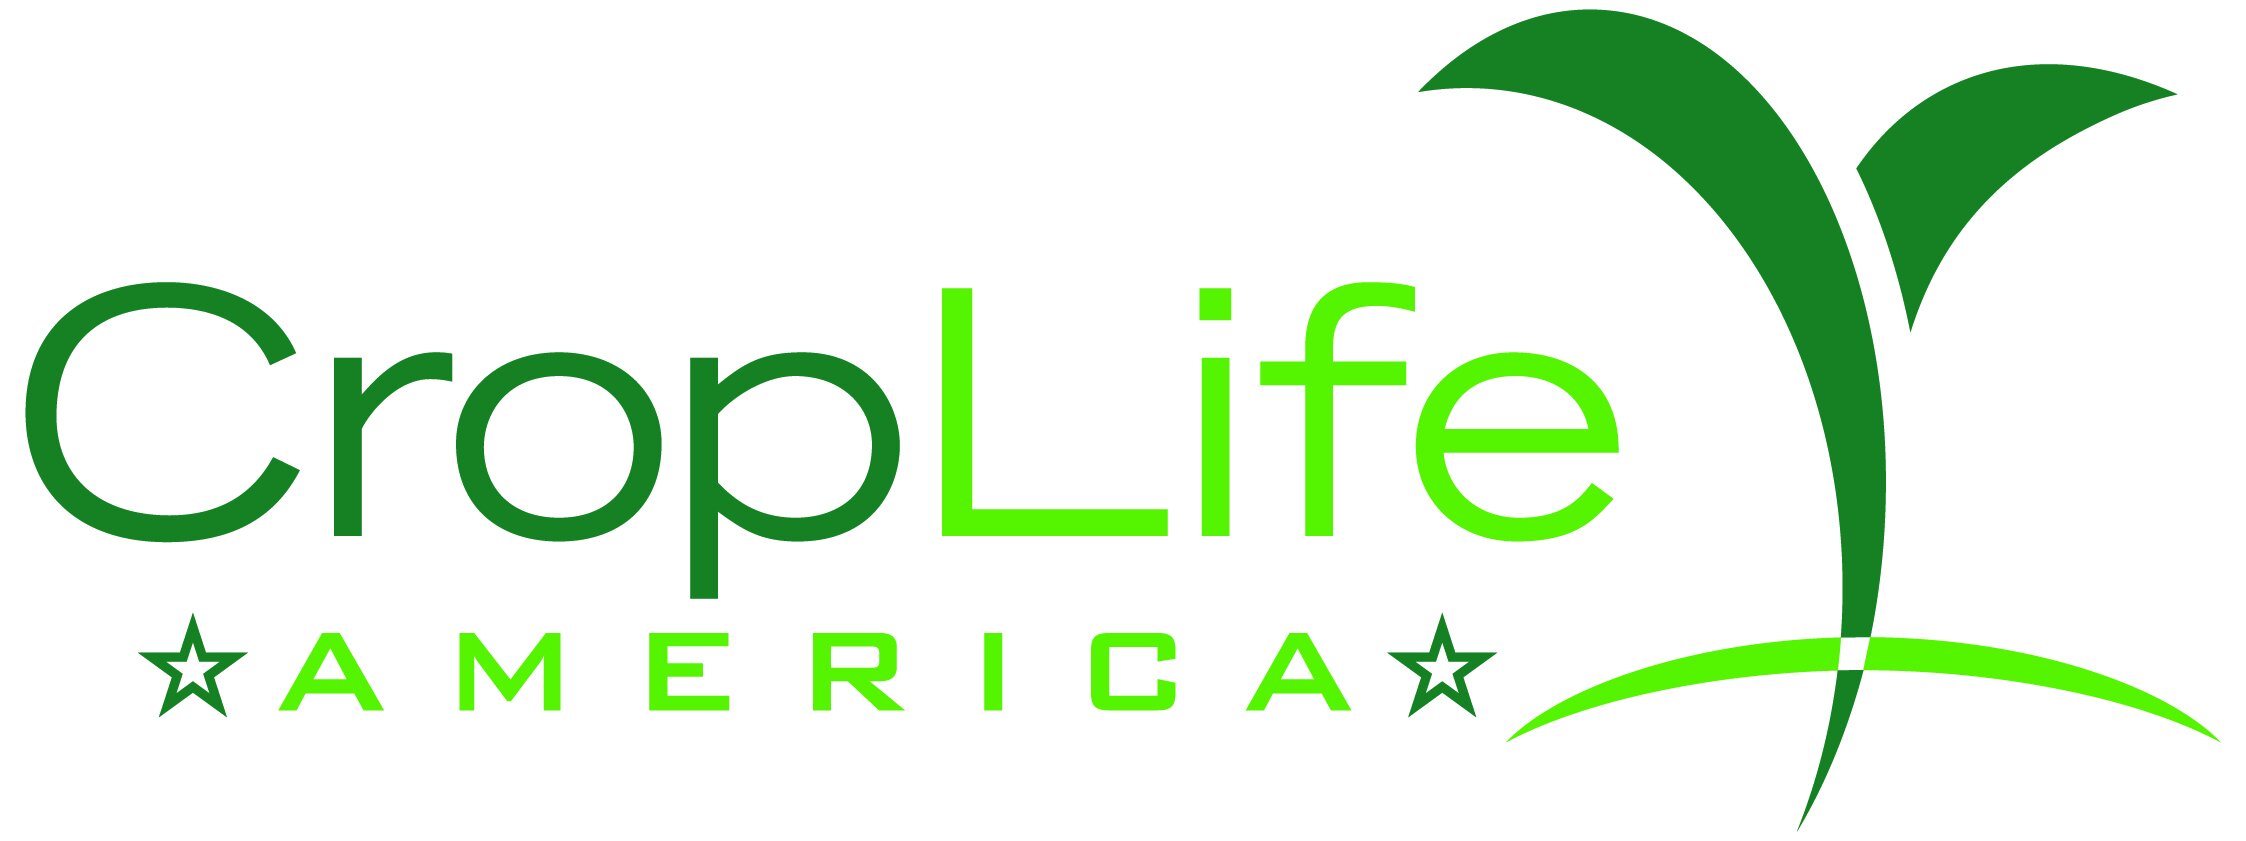 CropLife-America-Logo_300-dpi.jpg